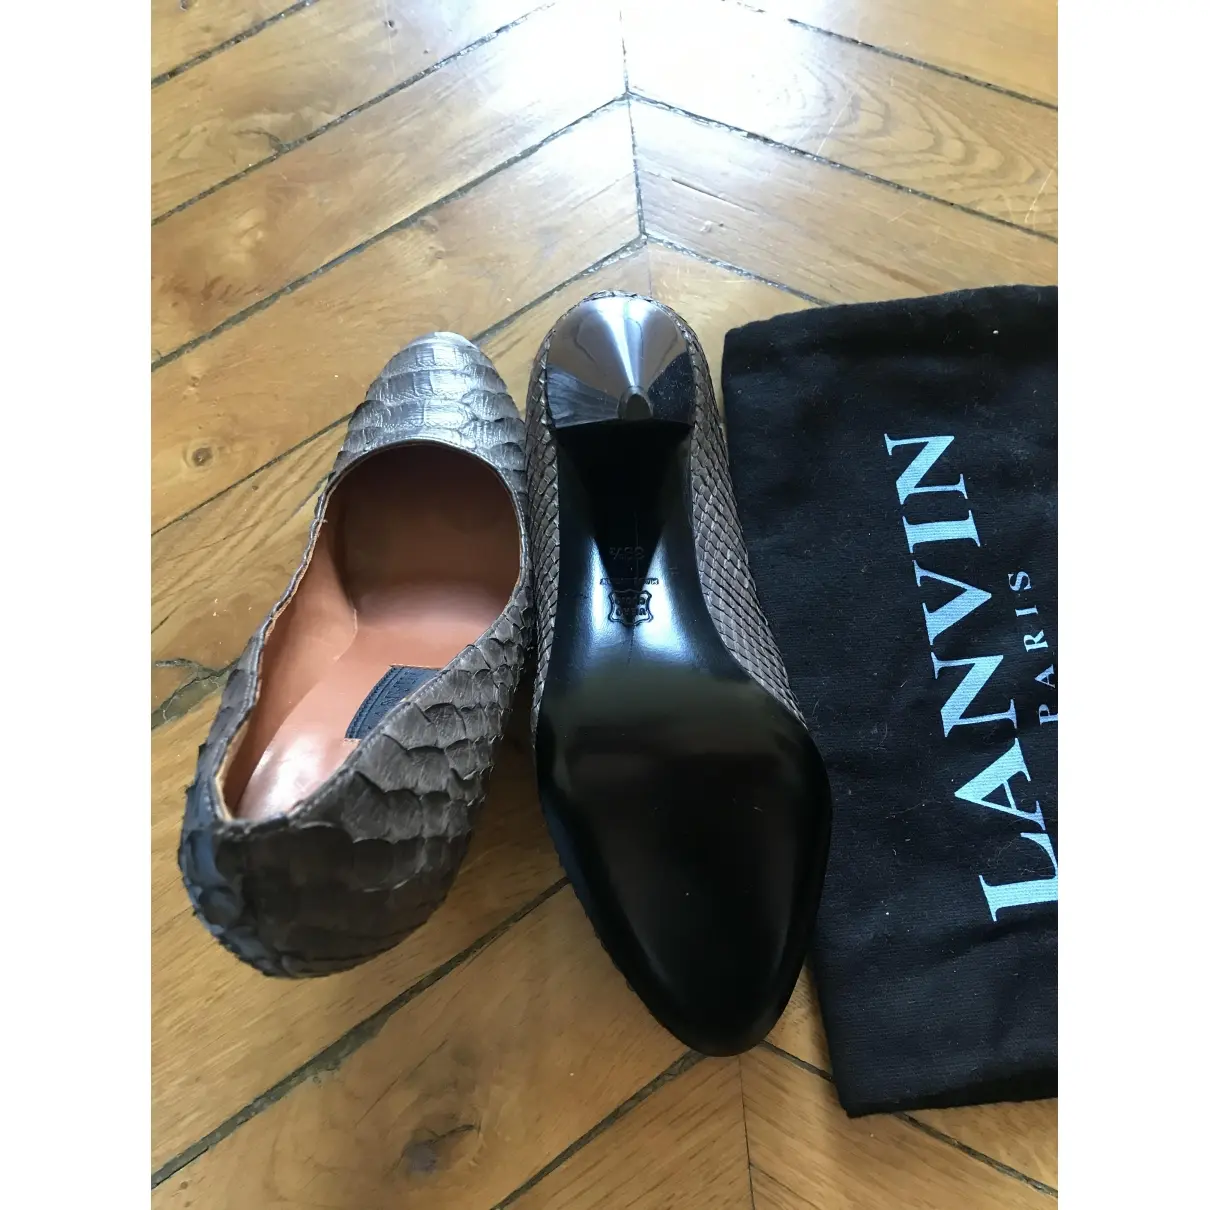 Lanvin Python heels for sale